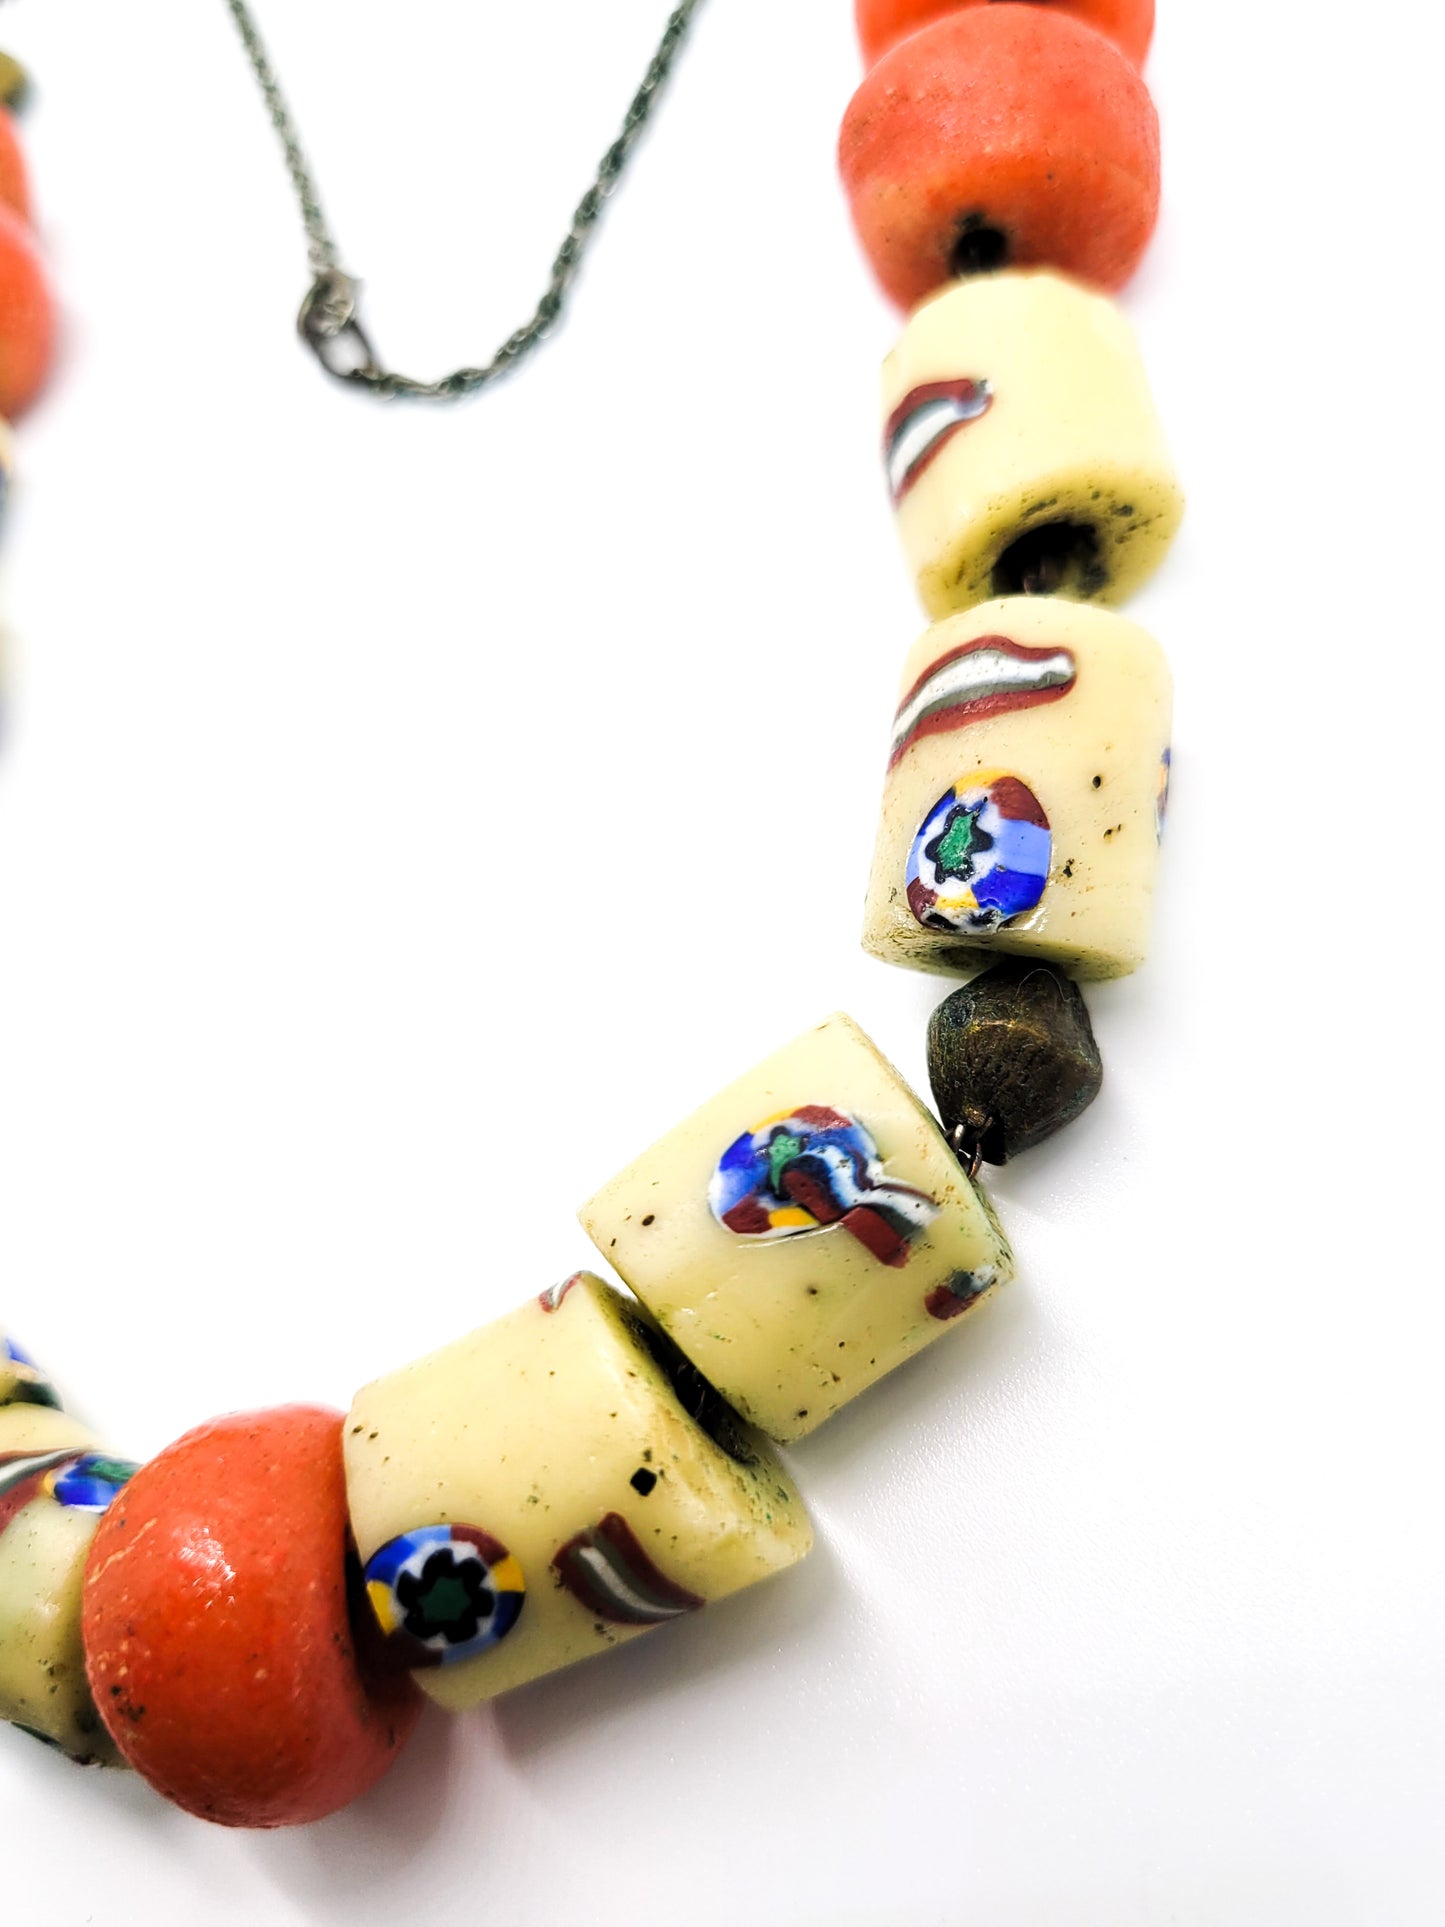 African trade beads antique Venetian Murano Millefiori glass beaded necklace